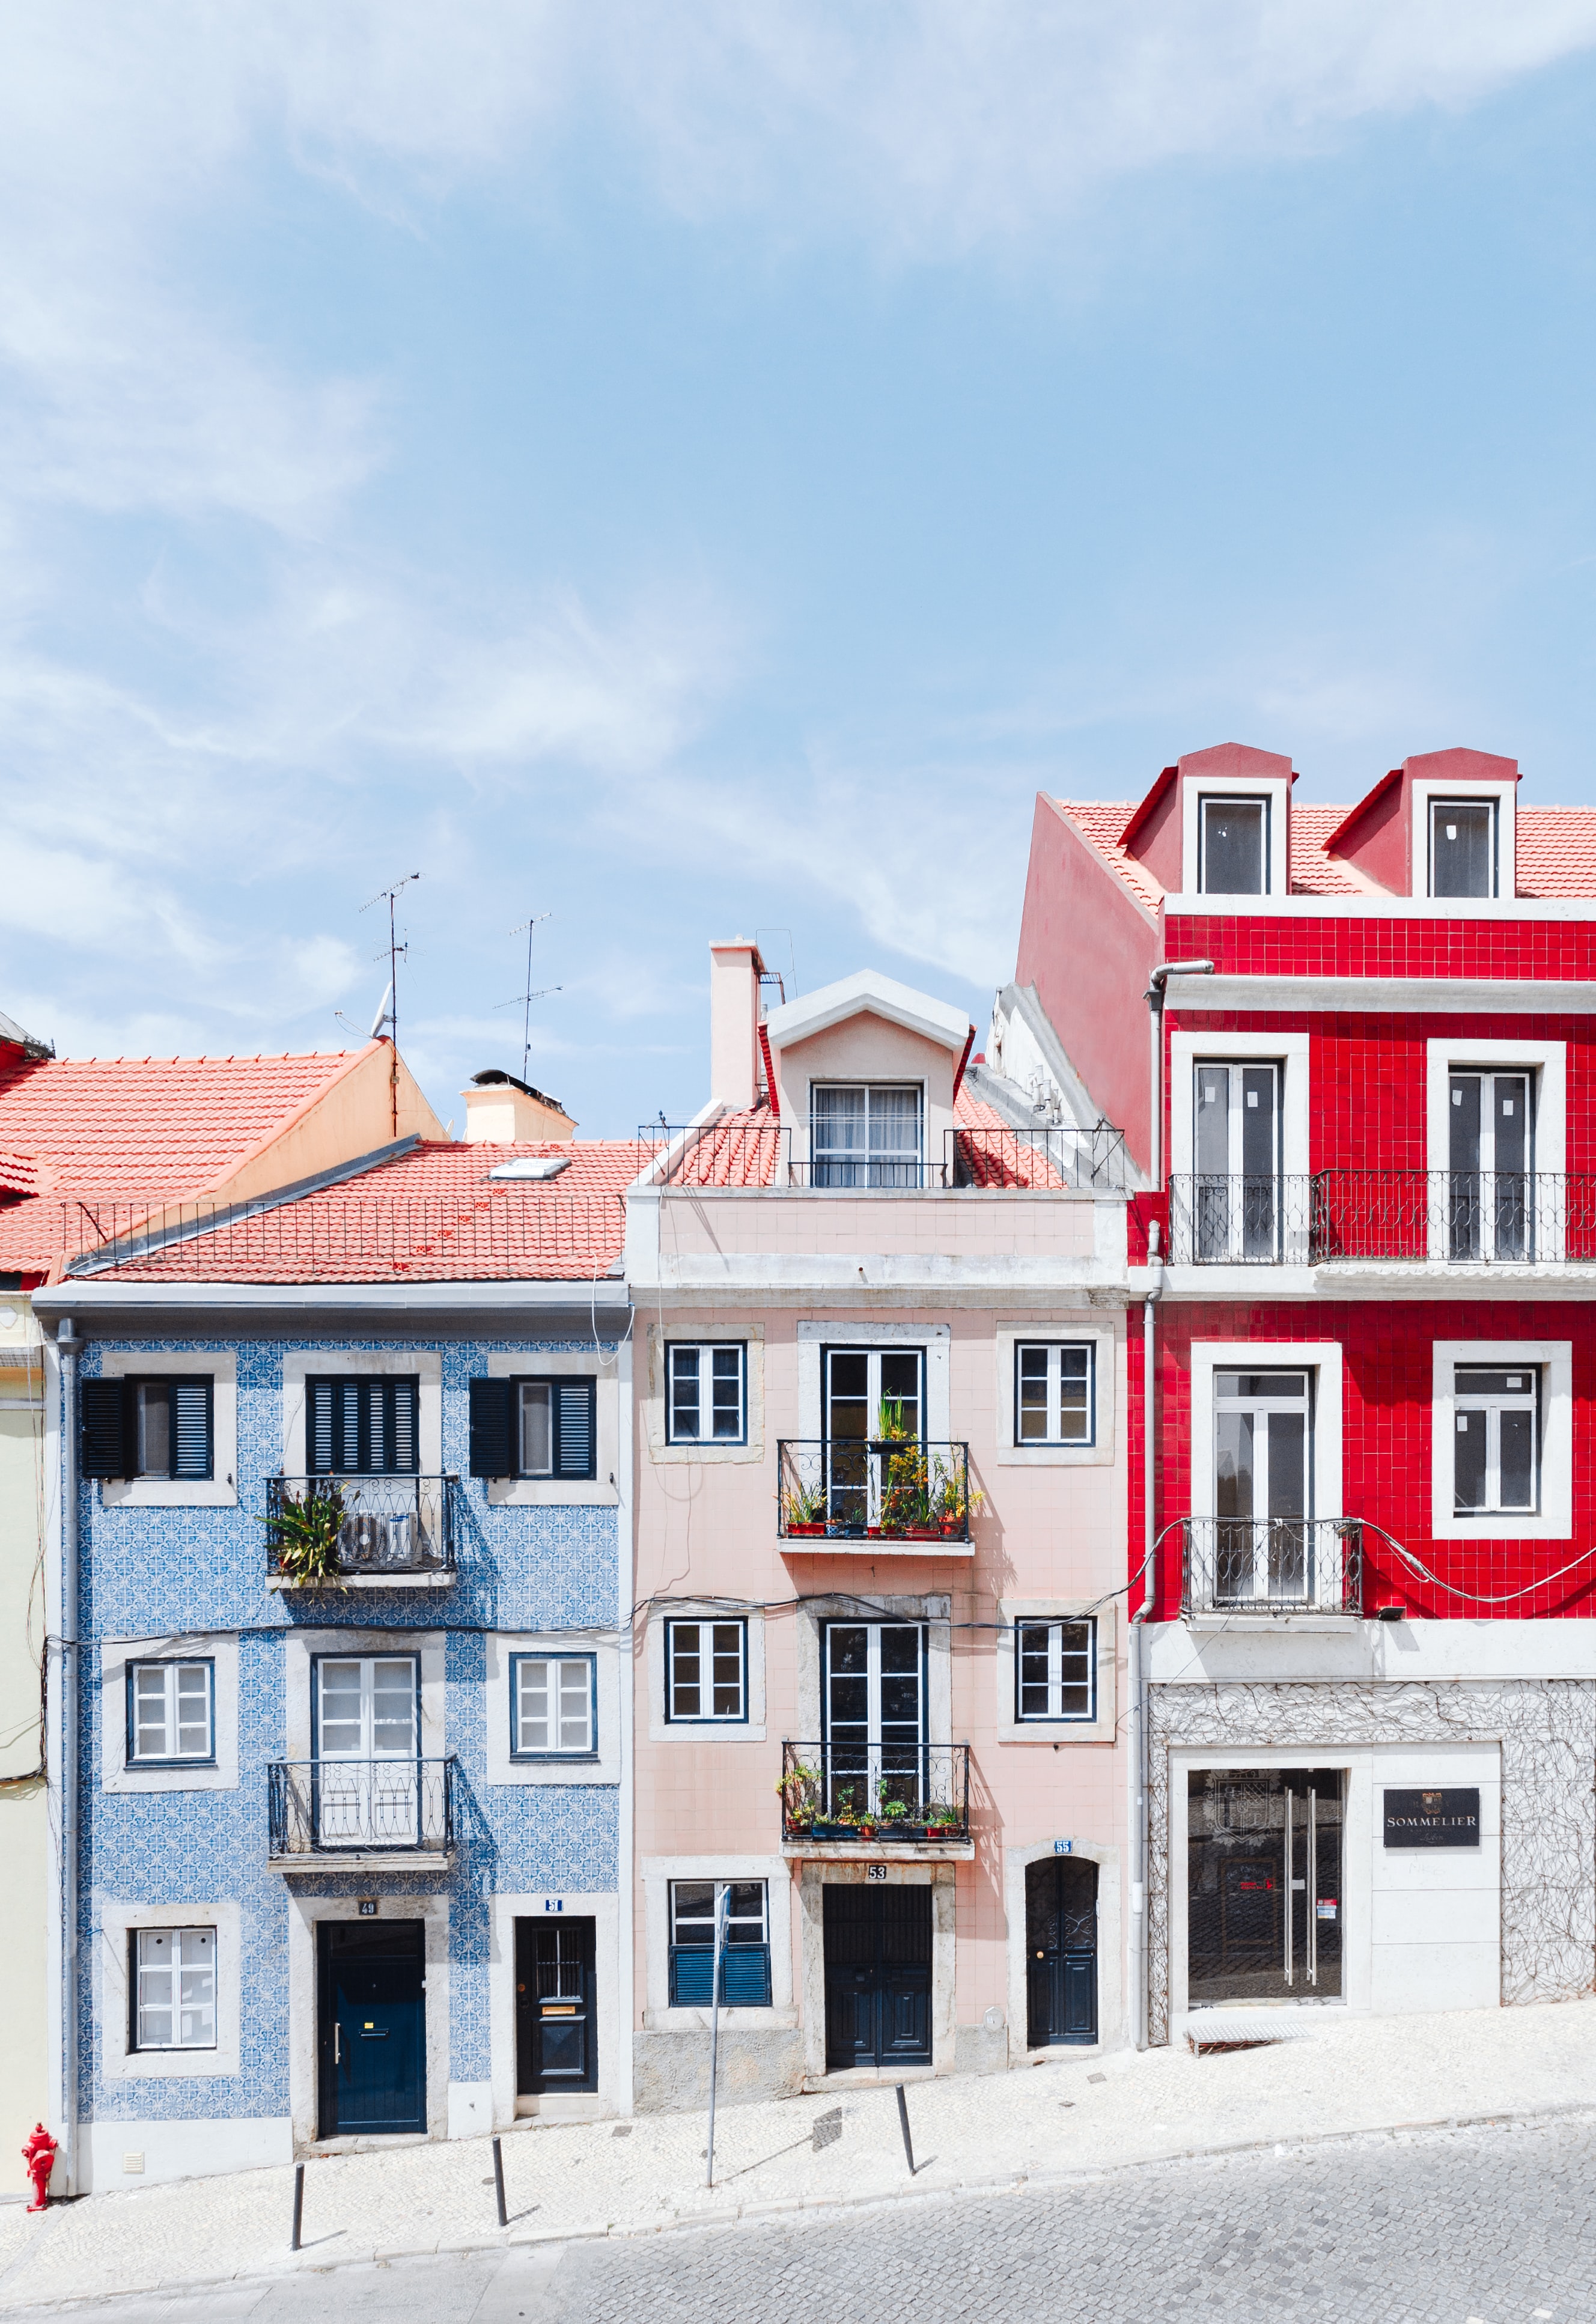 Casas coloridas en el centro de Lisboa (Hugo Sousa, Unsplash)